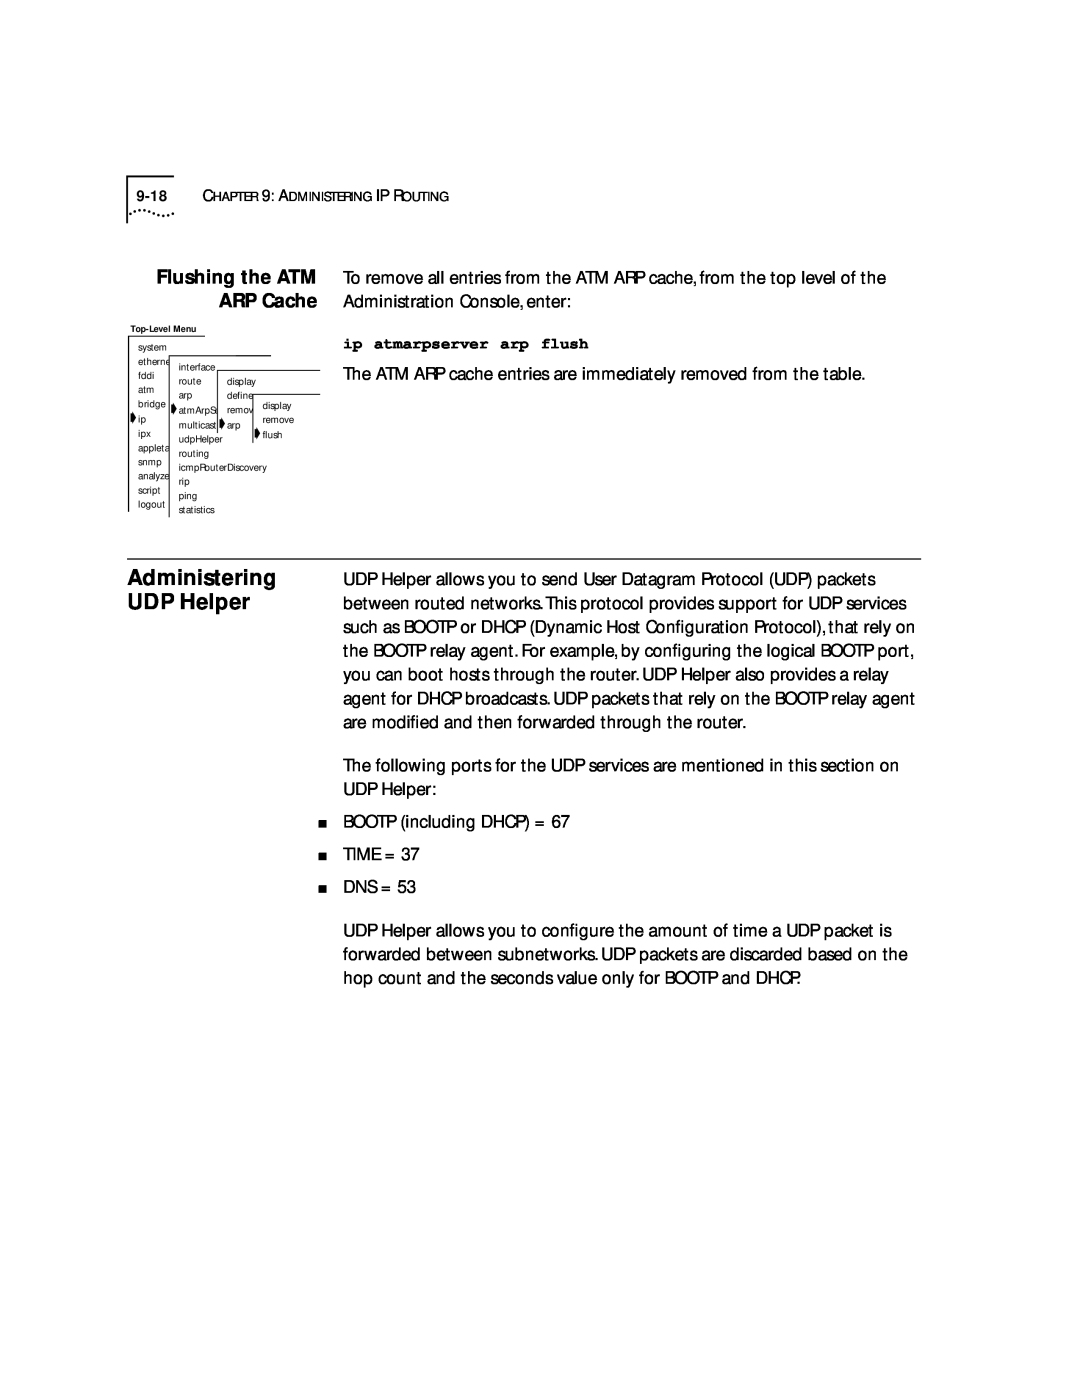 3Com 2500 manual UDP Helper, Administering, ARP Cache 